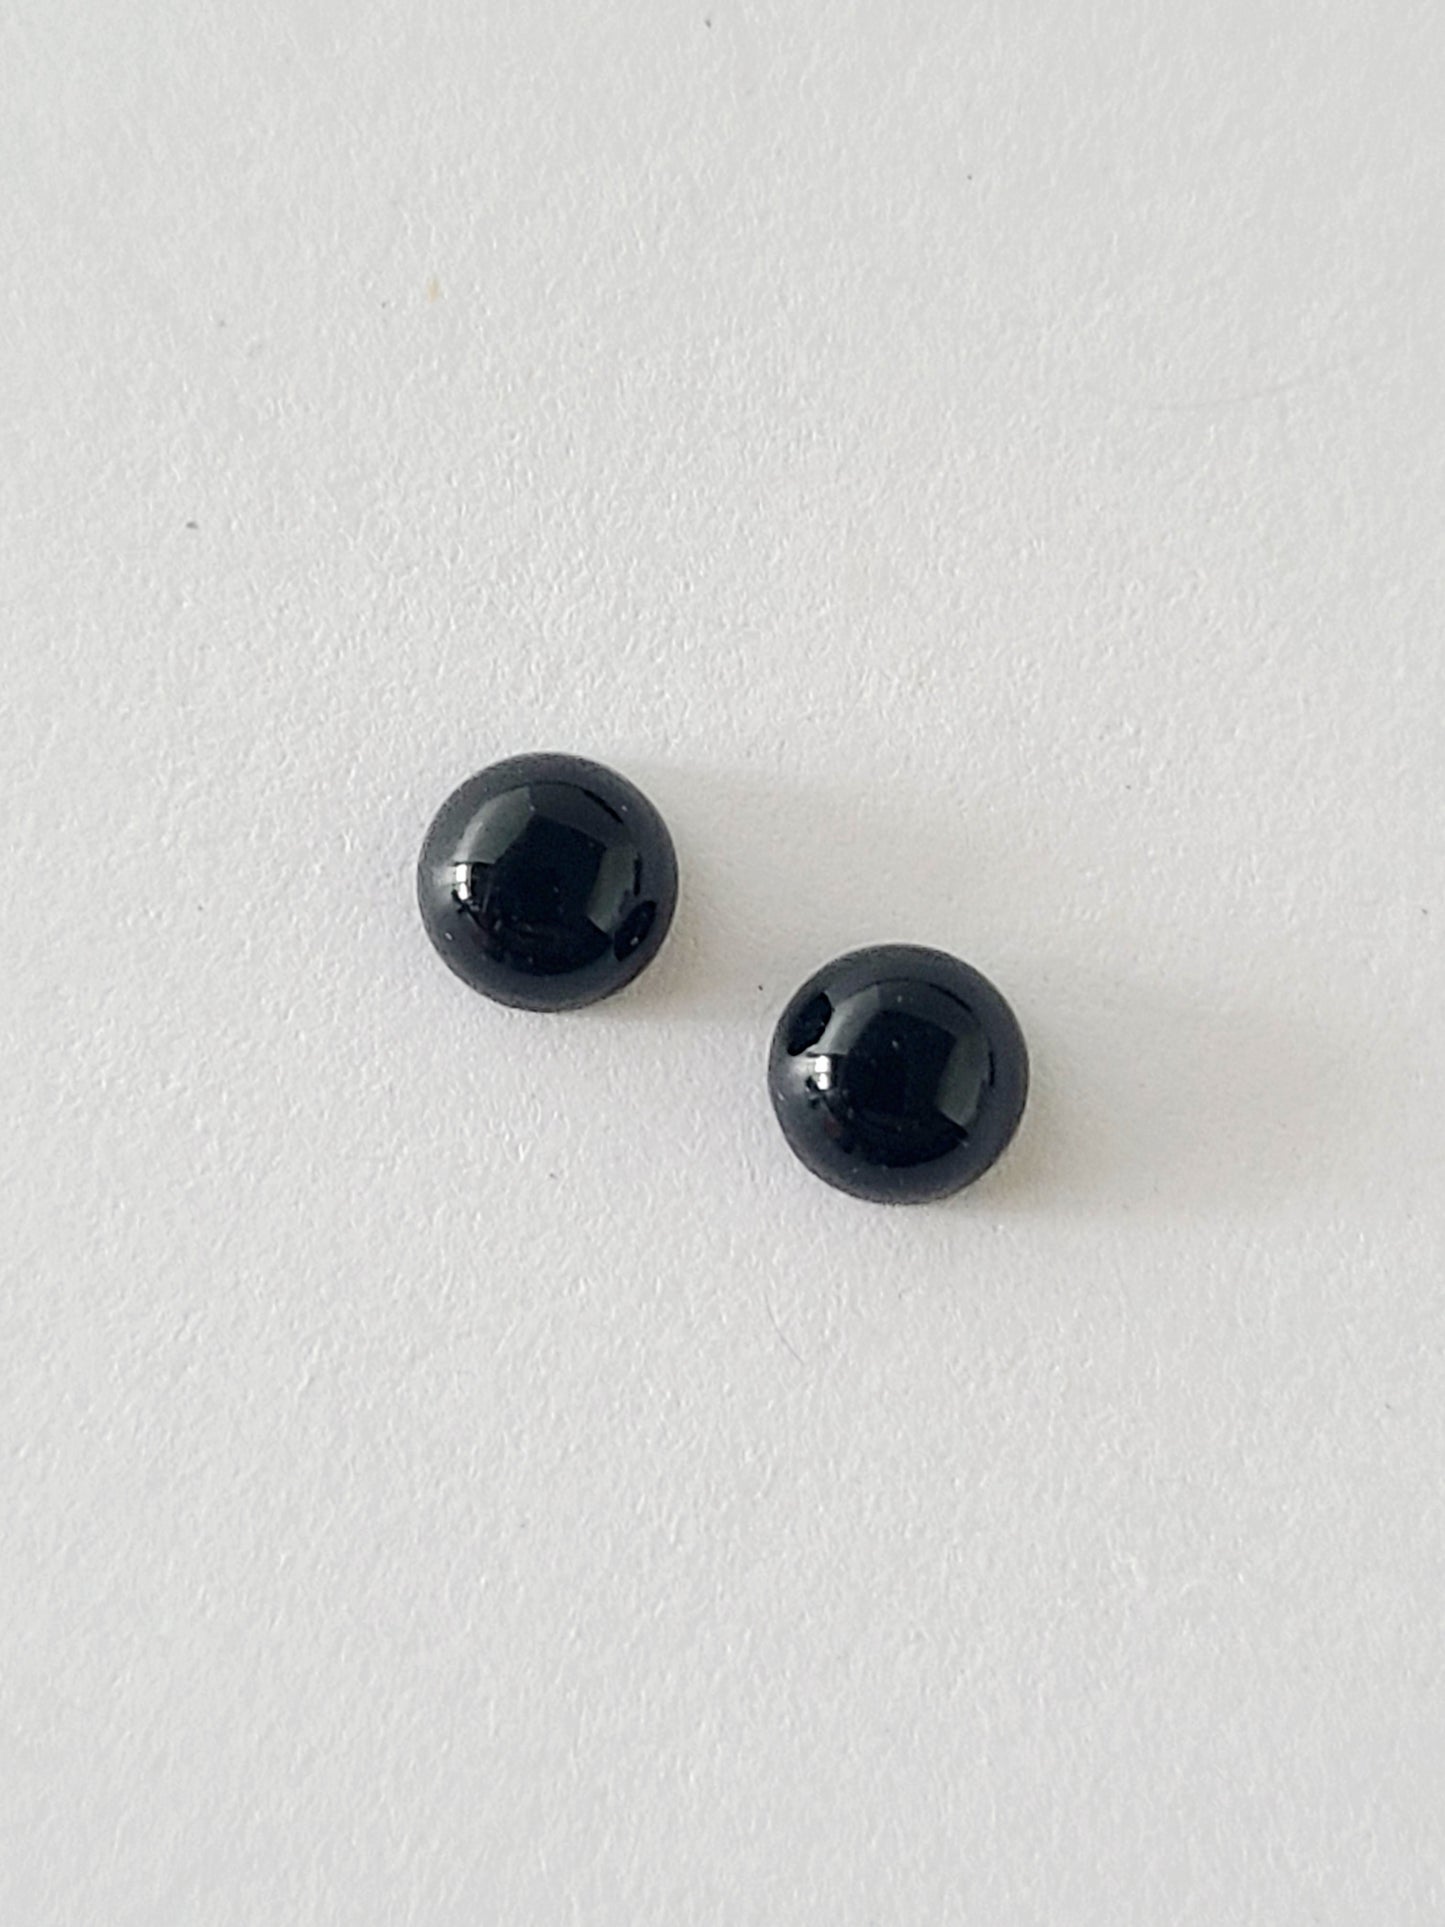 Cupped Gems Stud Earrings Choose Your Stone- 5mm gemstones